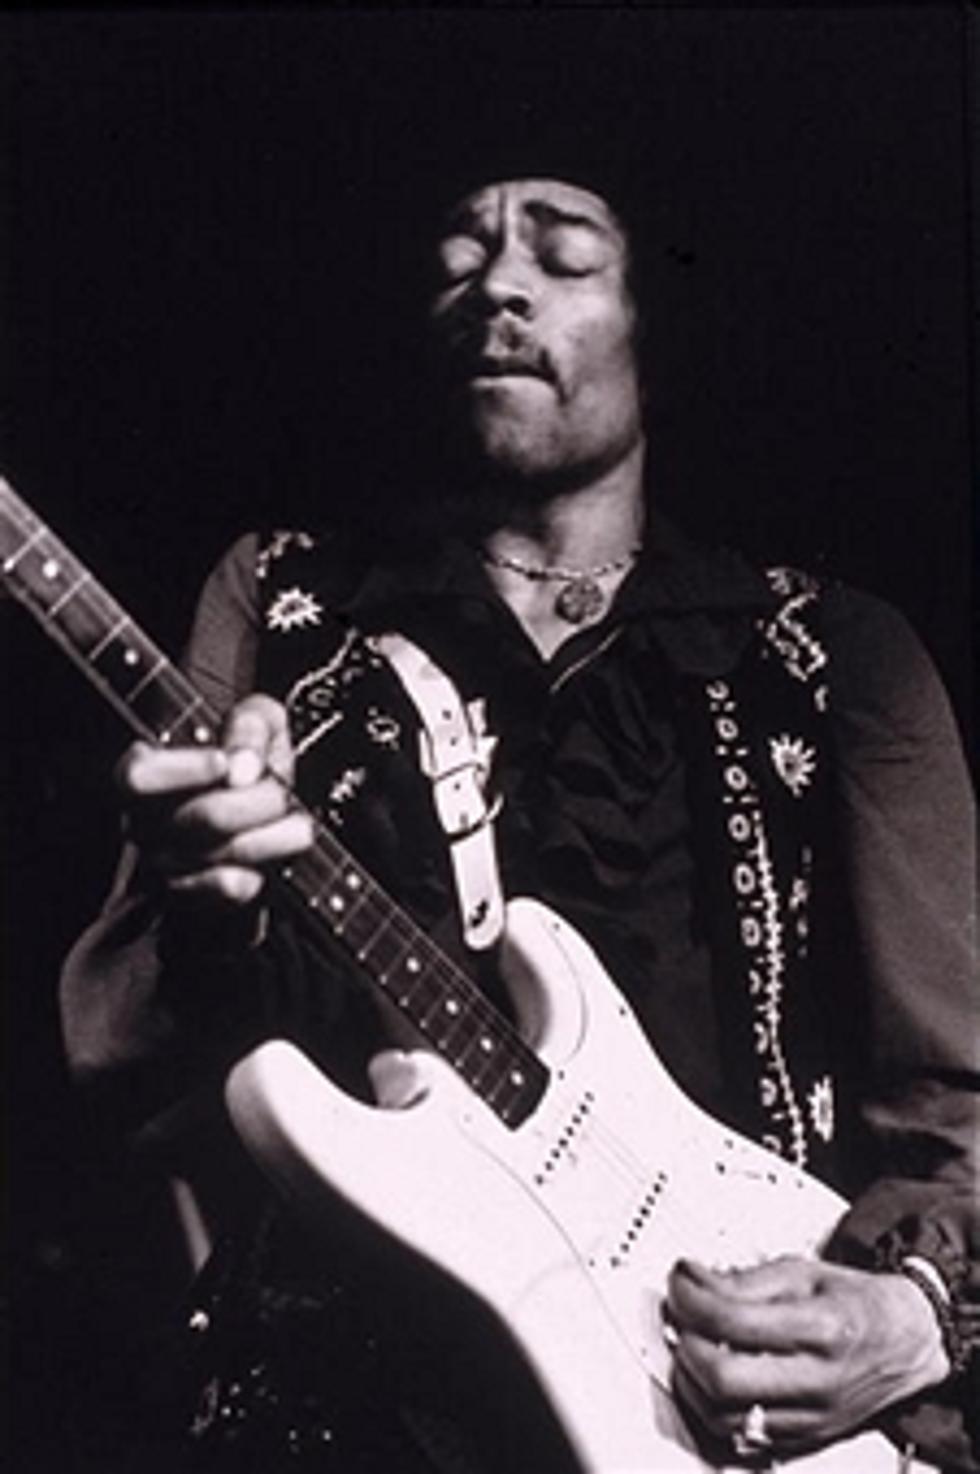 Thursday November 27th: Remembering Jimi Hendrix on His Birthday